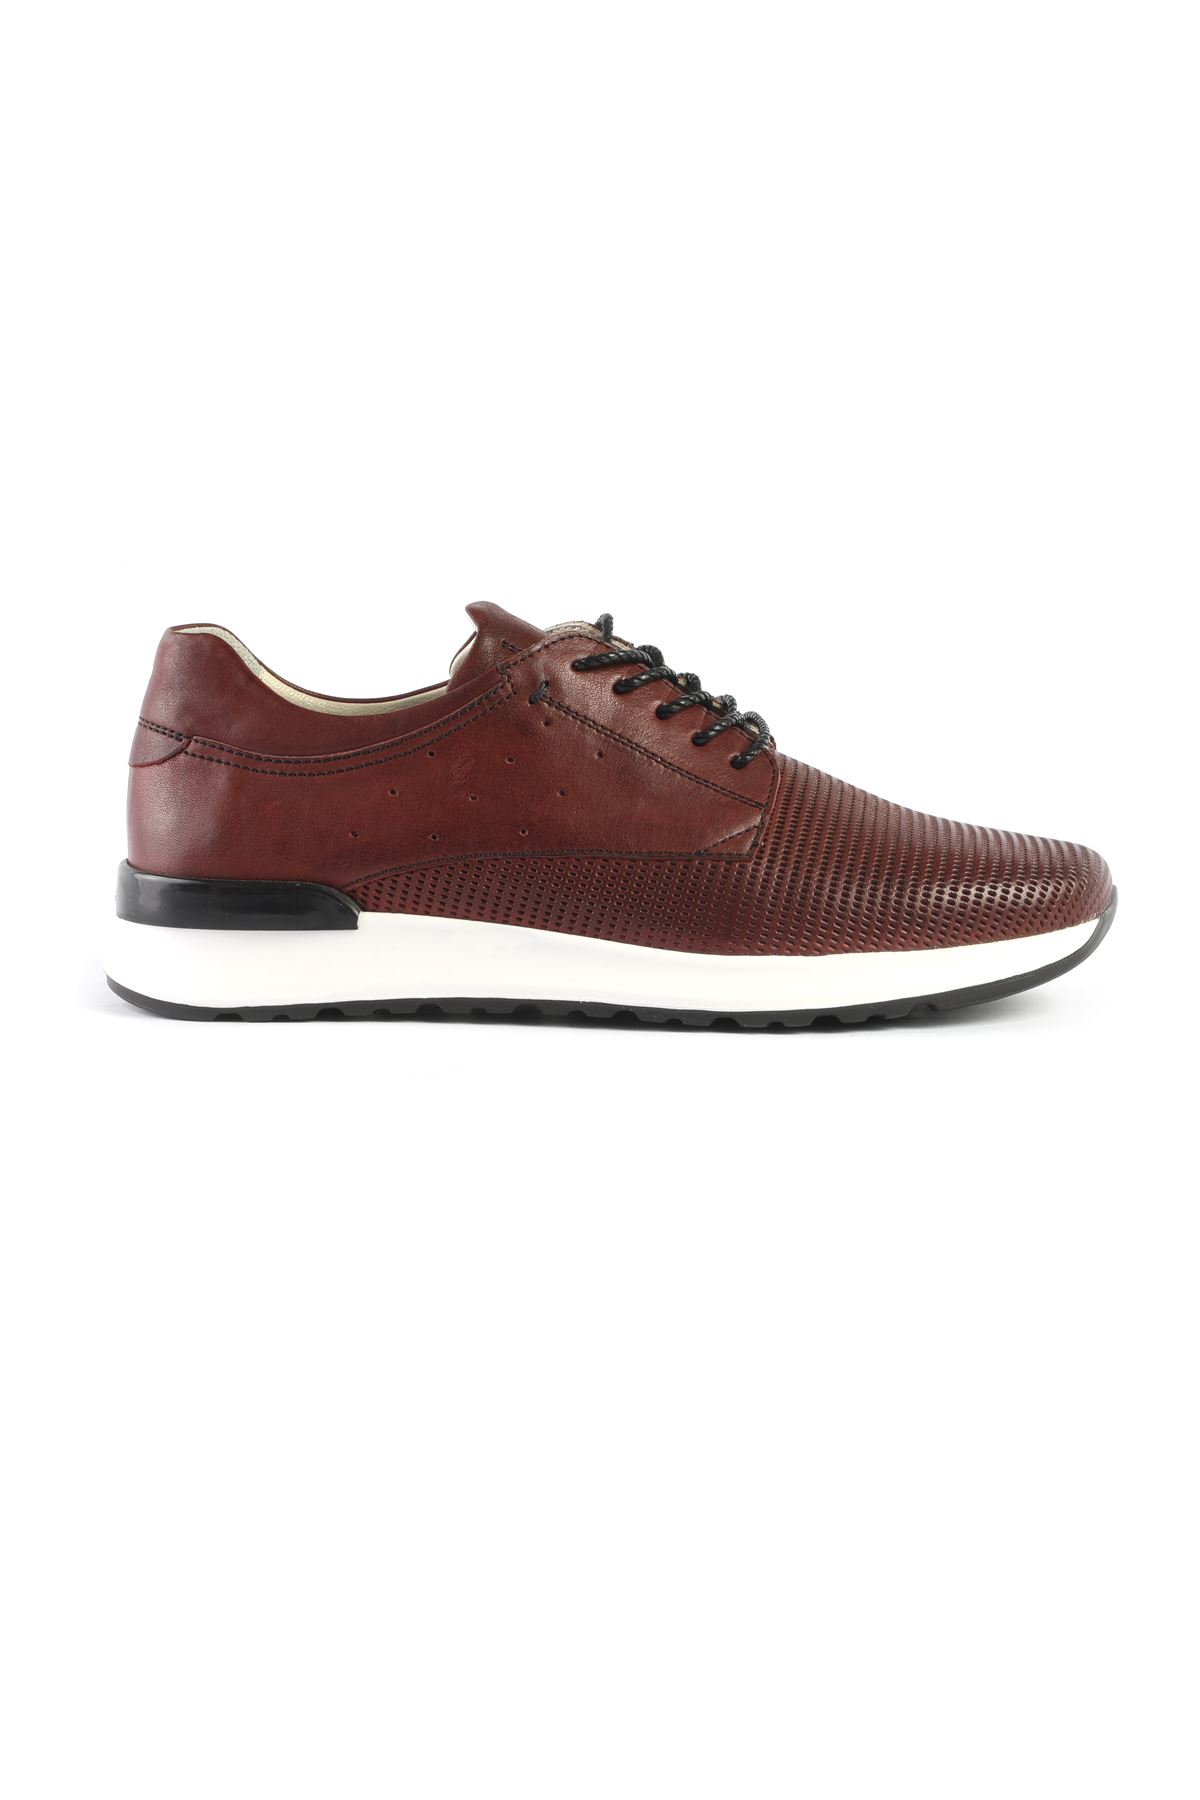 Libero 3046 Claret Red Sport Shoes